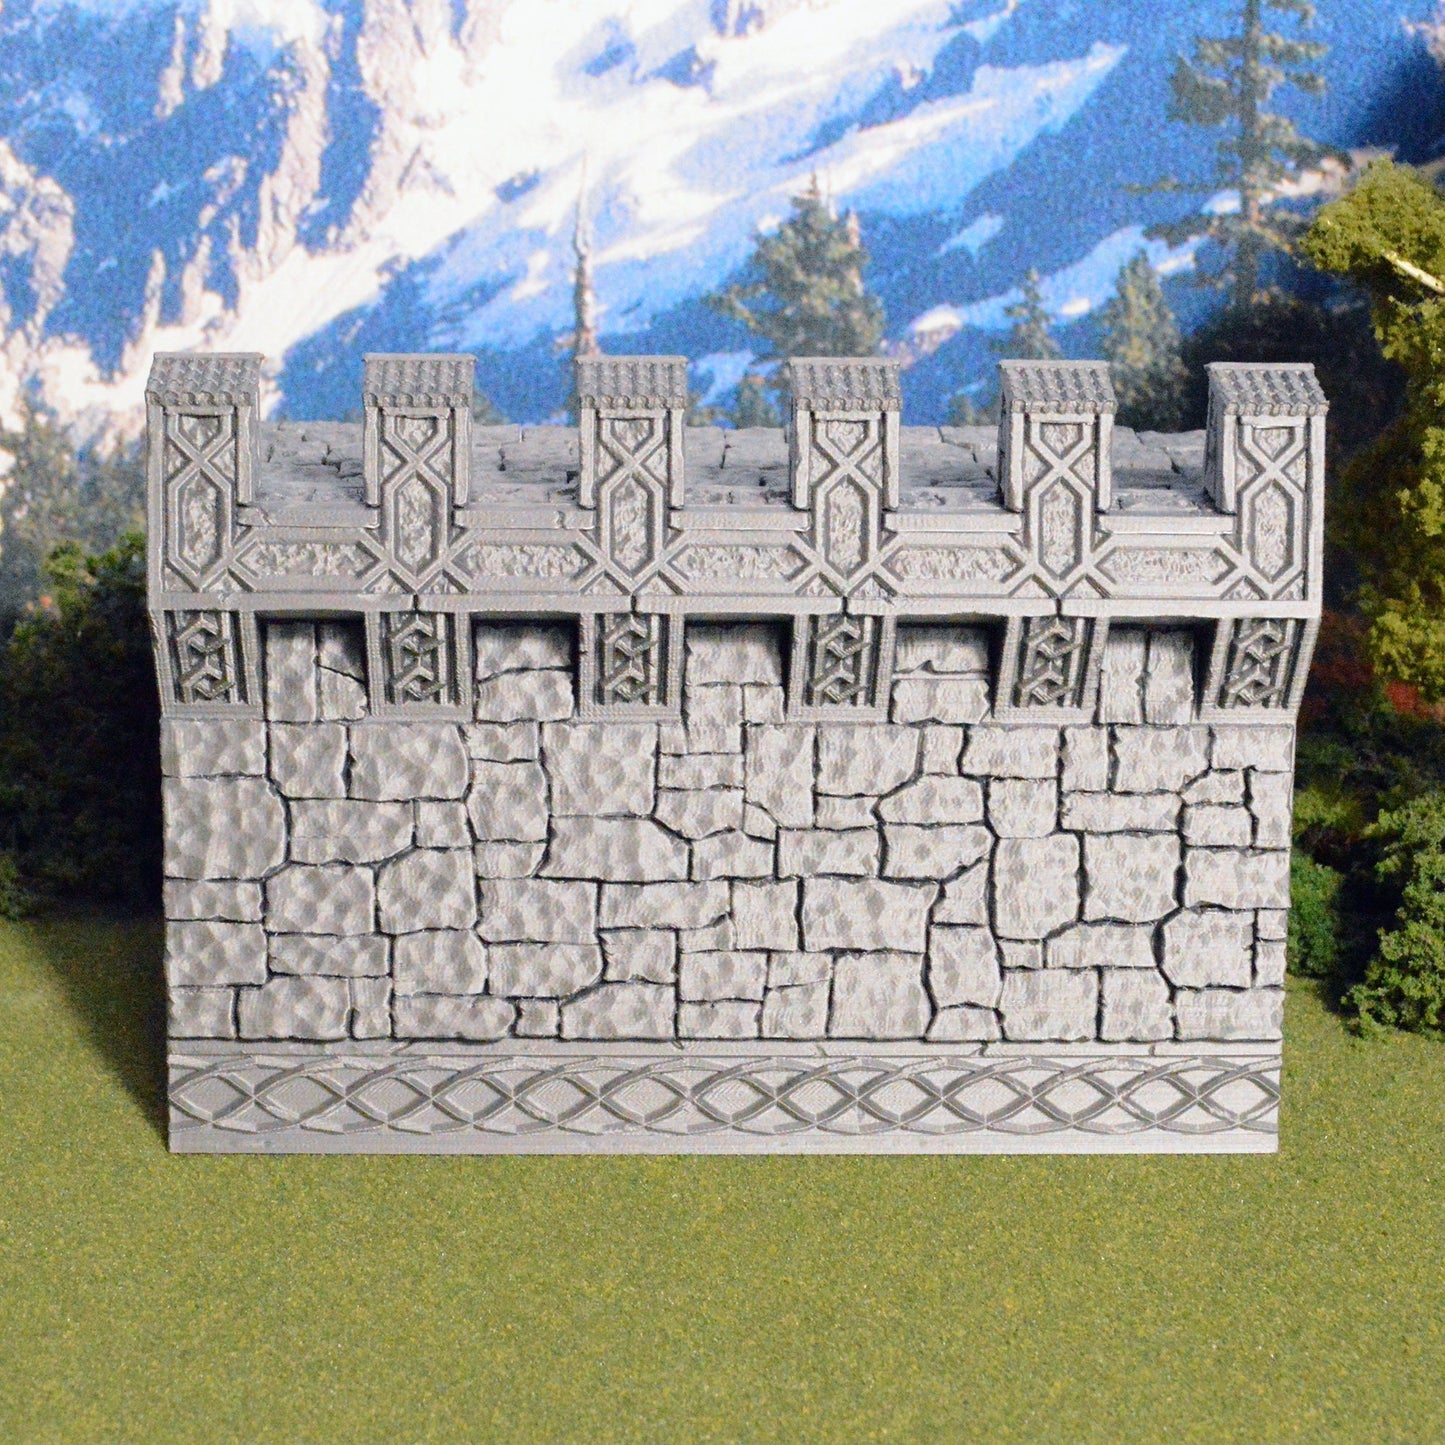 Ironhelm Ramparts 15mm 28mm for D&D Terrain, DnD Pathfinder Warhammer 40k Dwarven Walls - Modular OpenLOCK Castle Walls